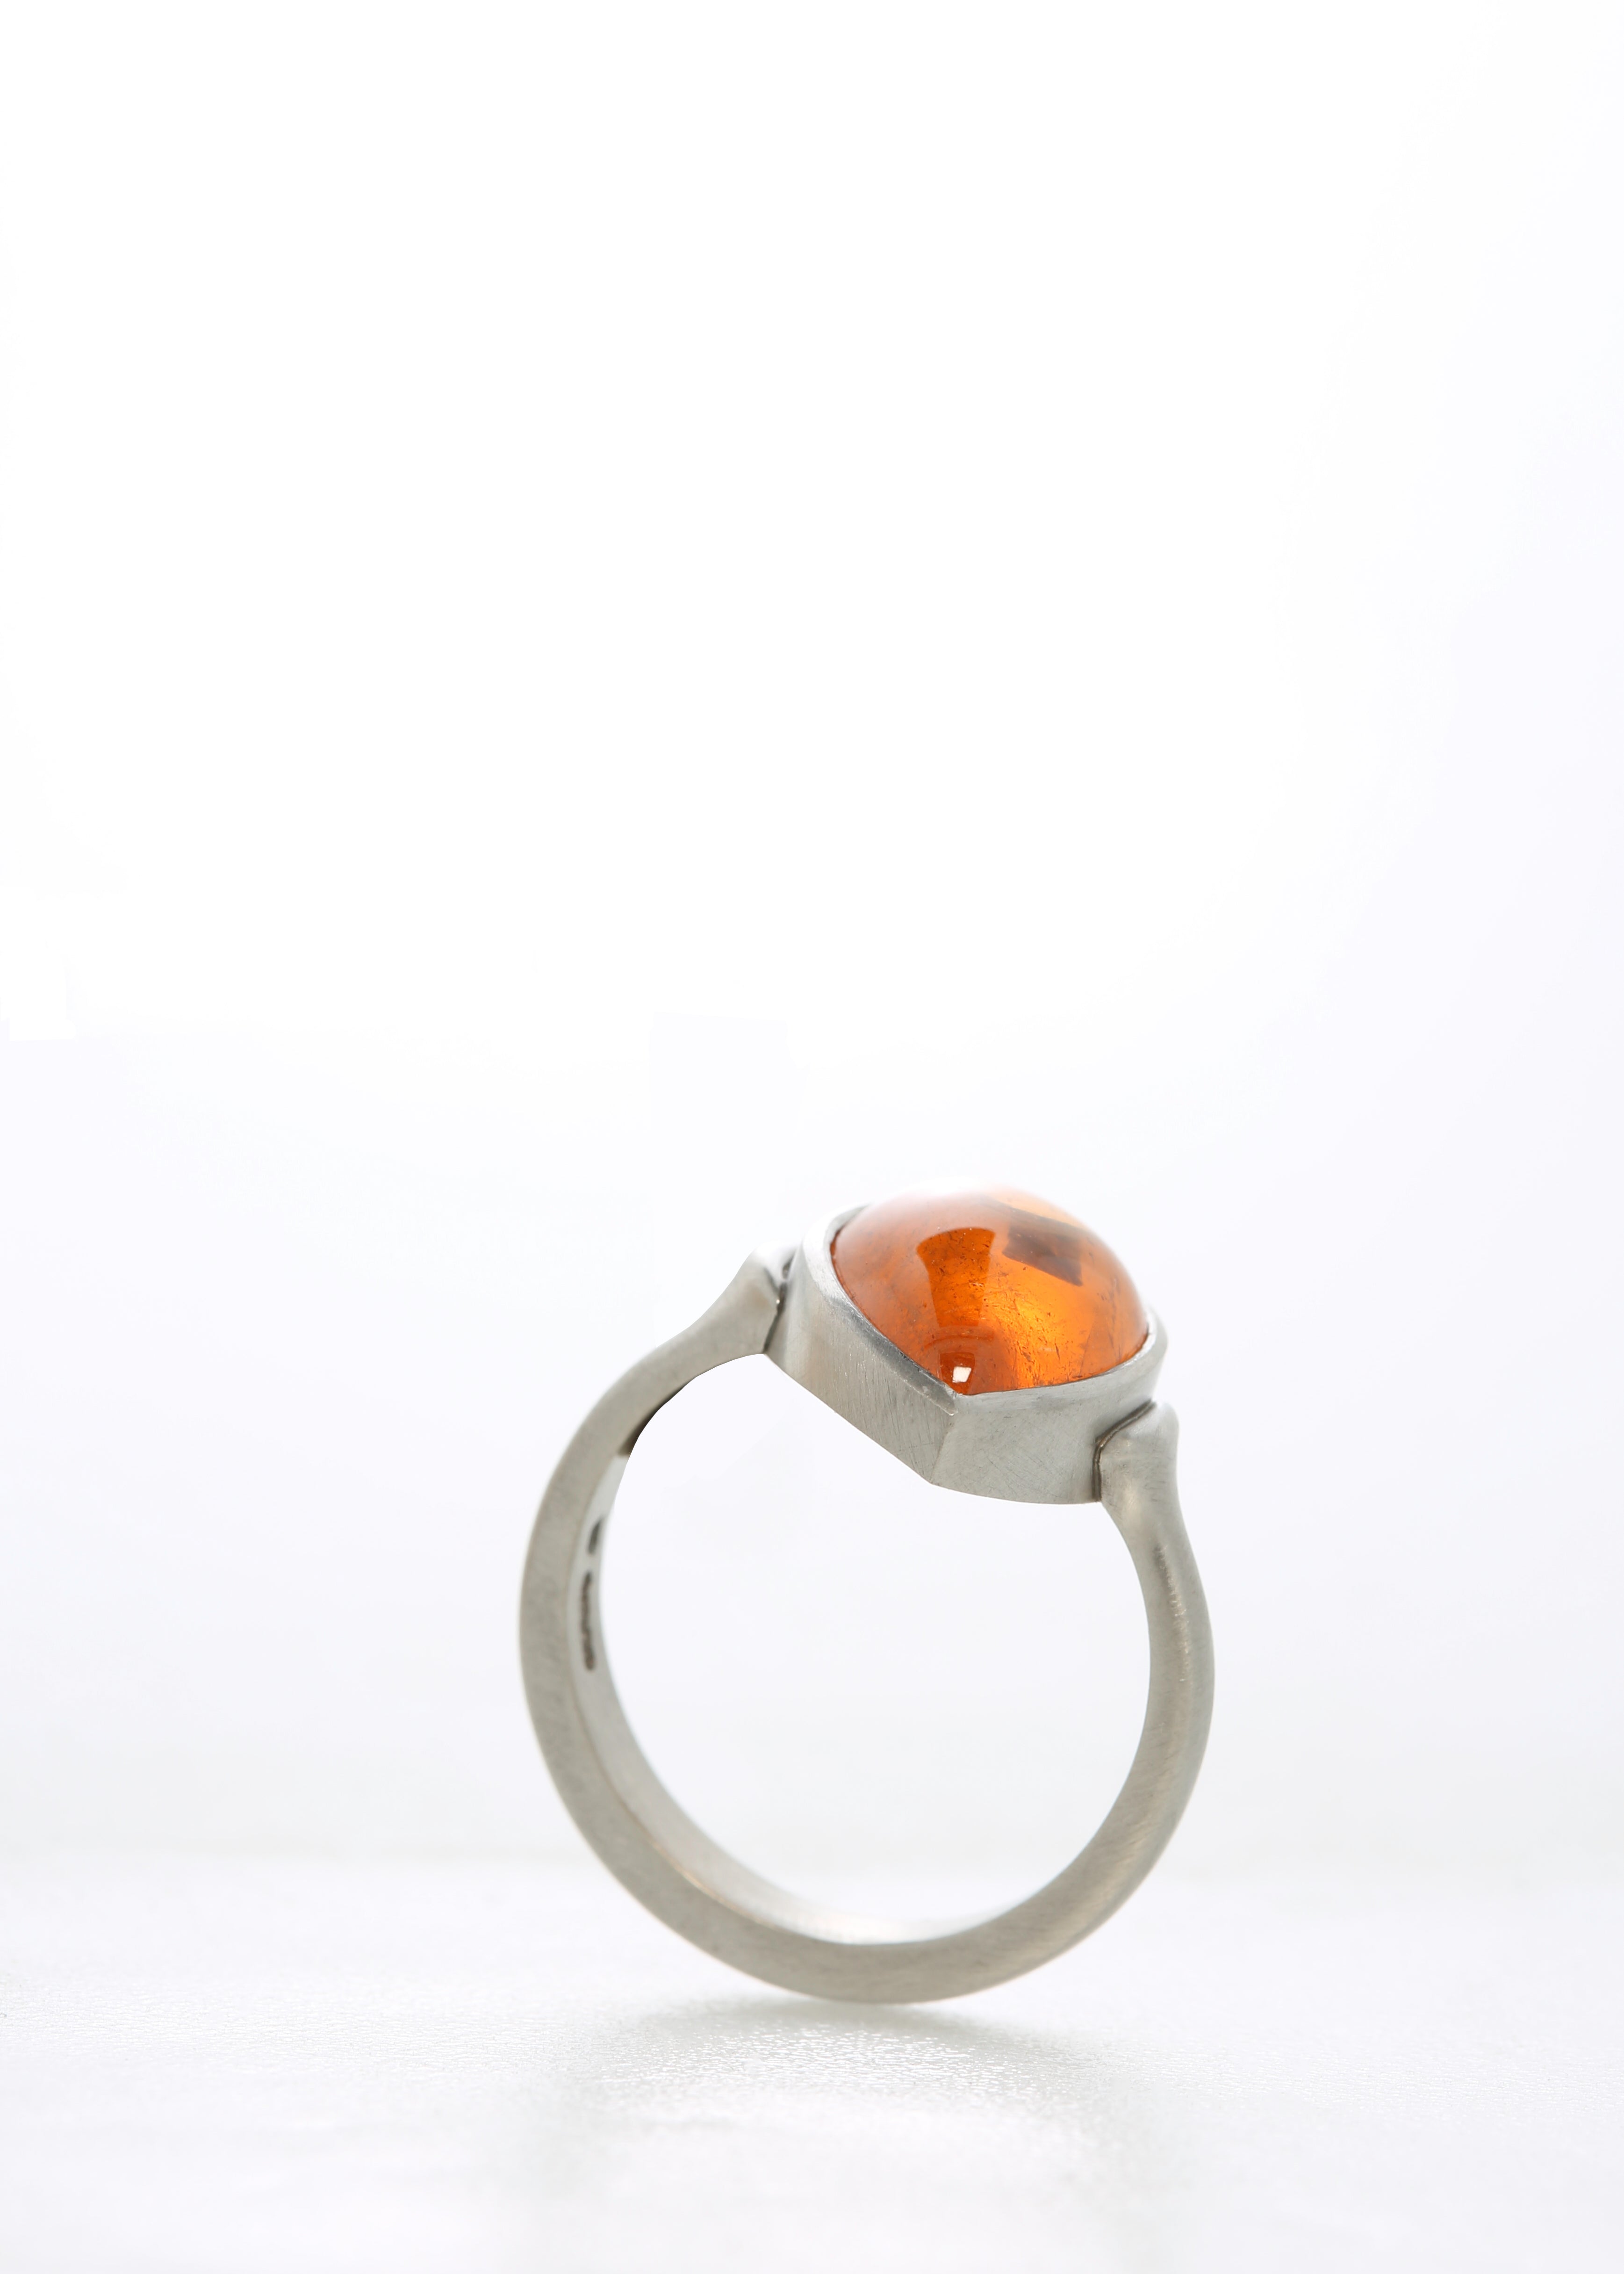 Mandarin garnet cabochon in platinum ring.